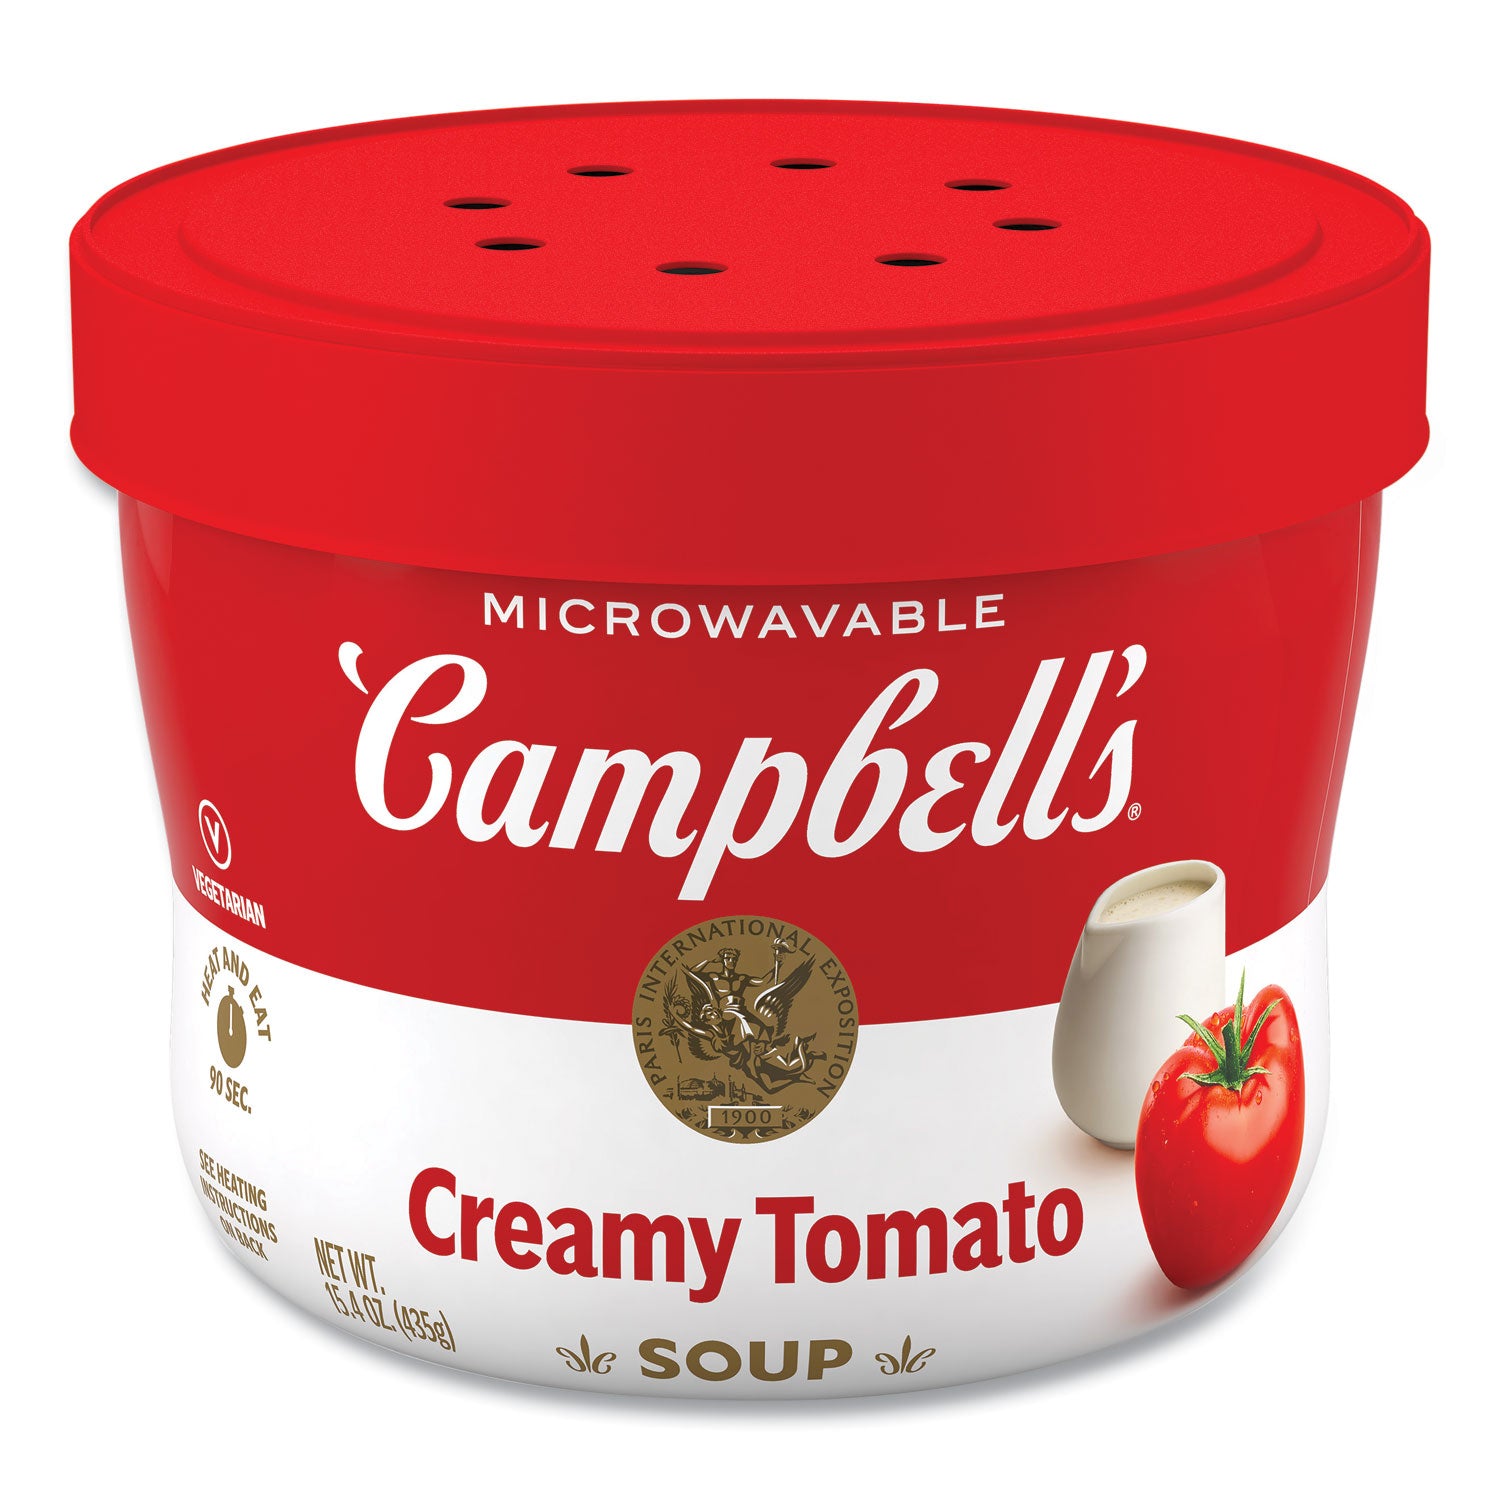 creamy-tomato-bowl-tomato-154-oz-8-carton-ships-in-1-3-business-days_grr35100006 - 3